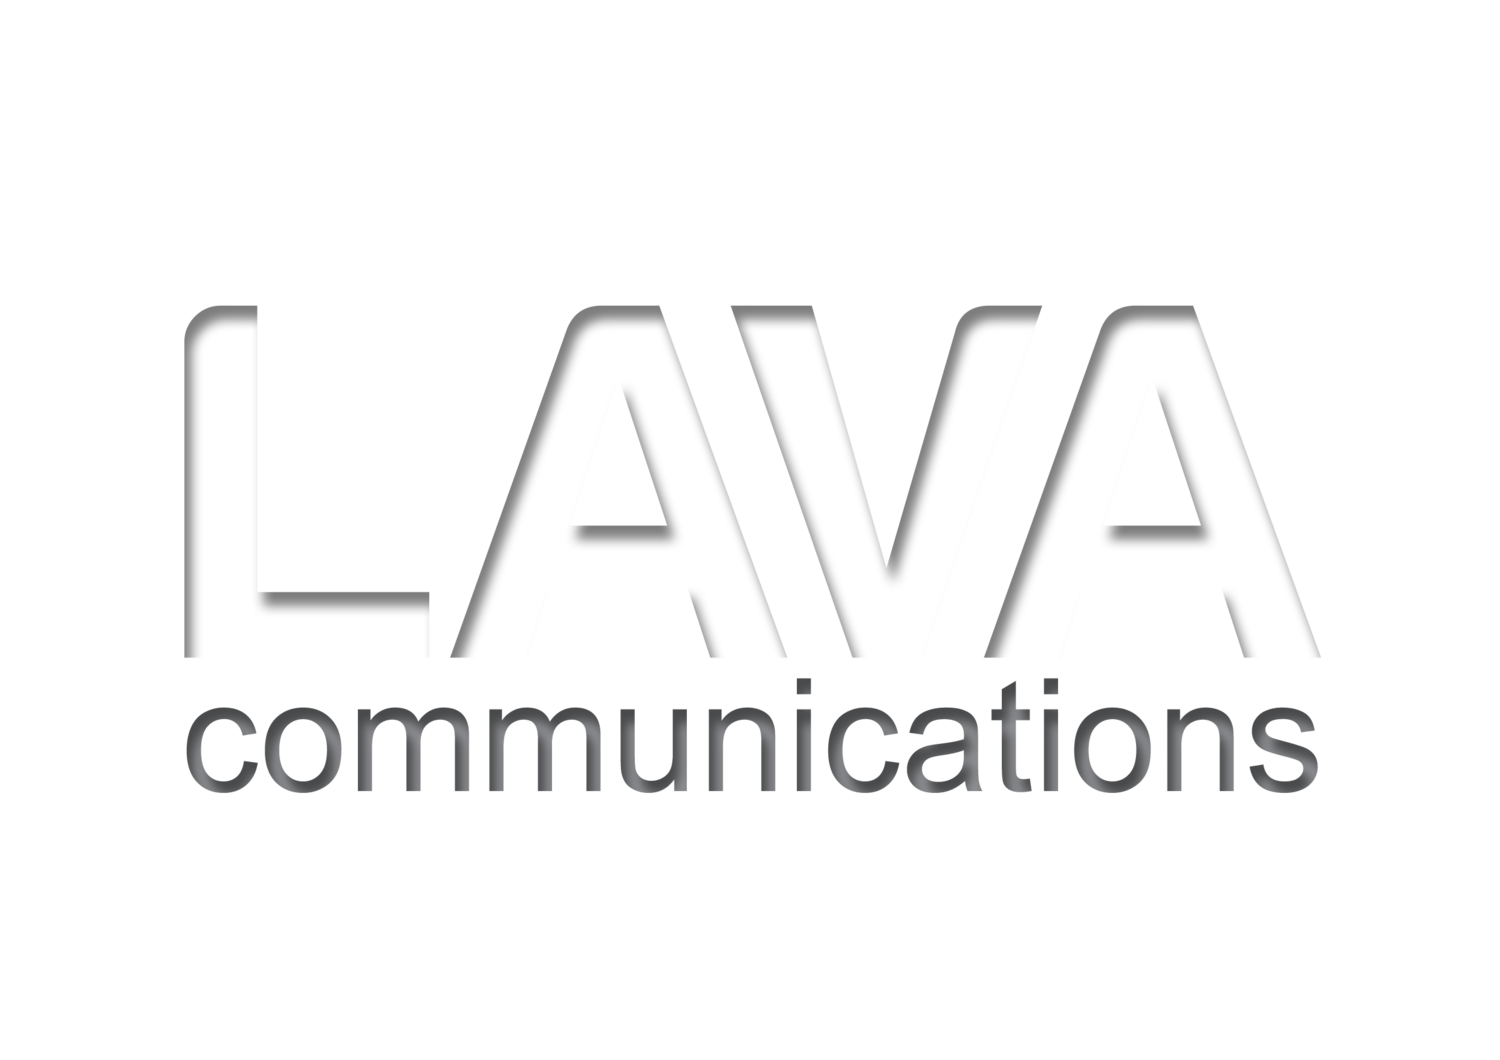 LAVA Communications